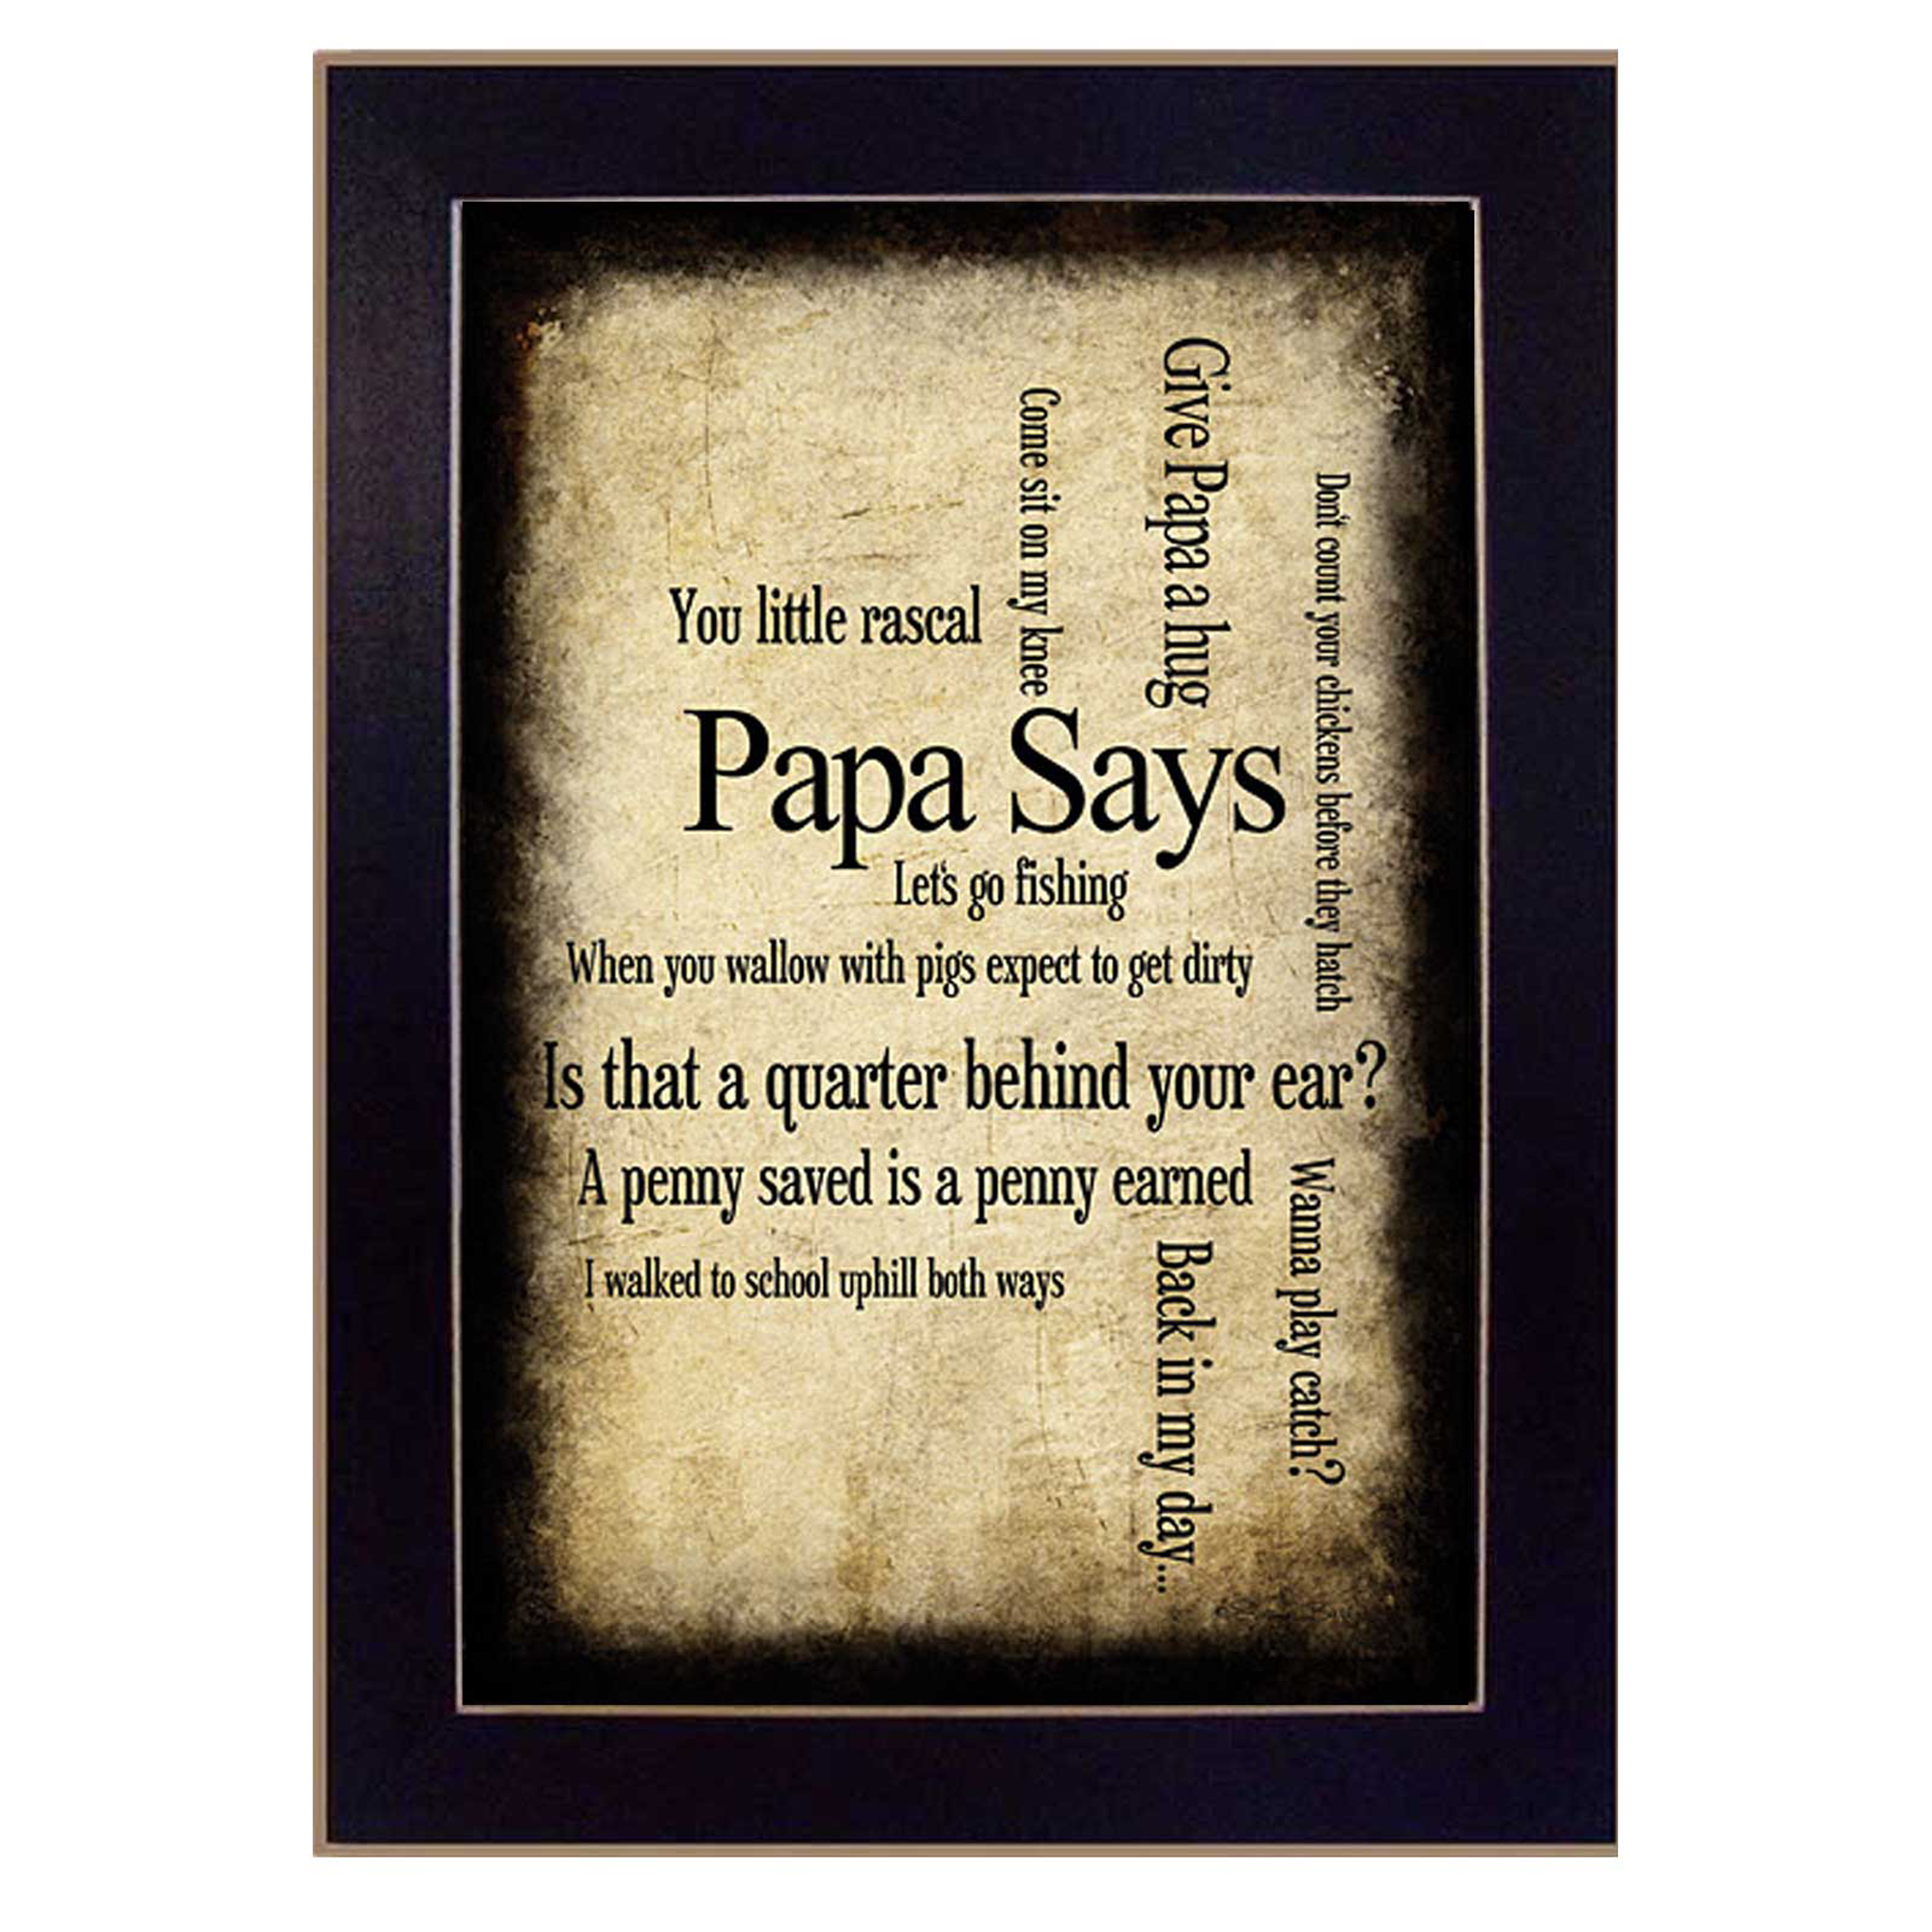 "Papa Says" By Susan Ball, Printed Wall Art, Ready To Hang Framed Poster, Black Frame